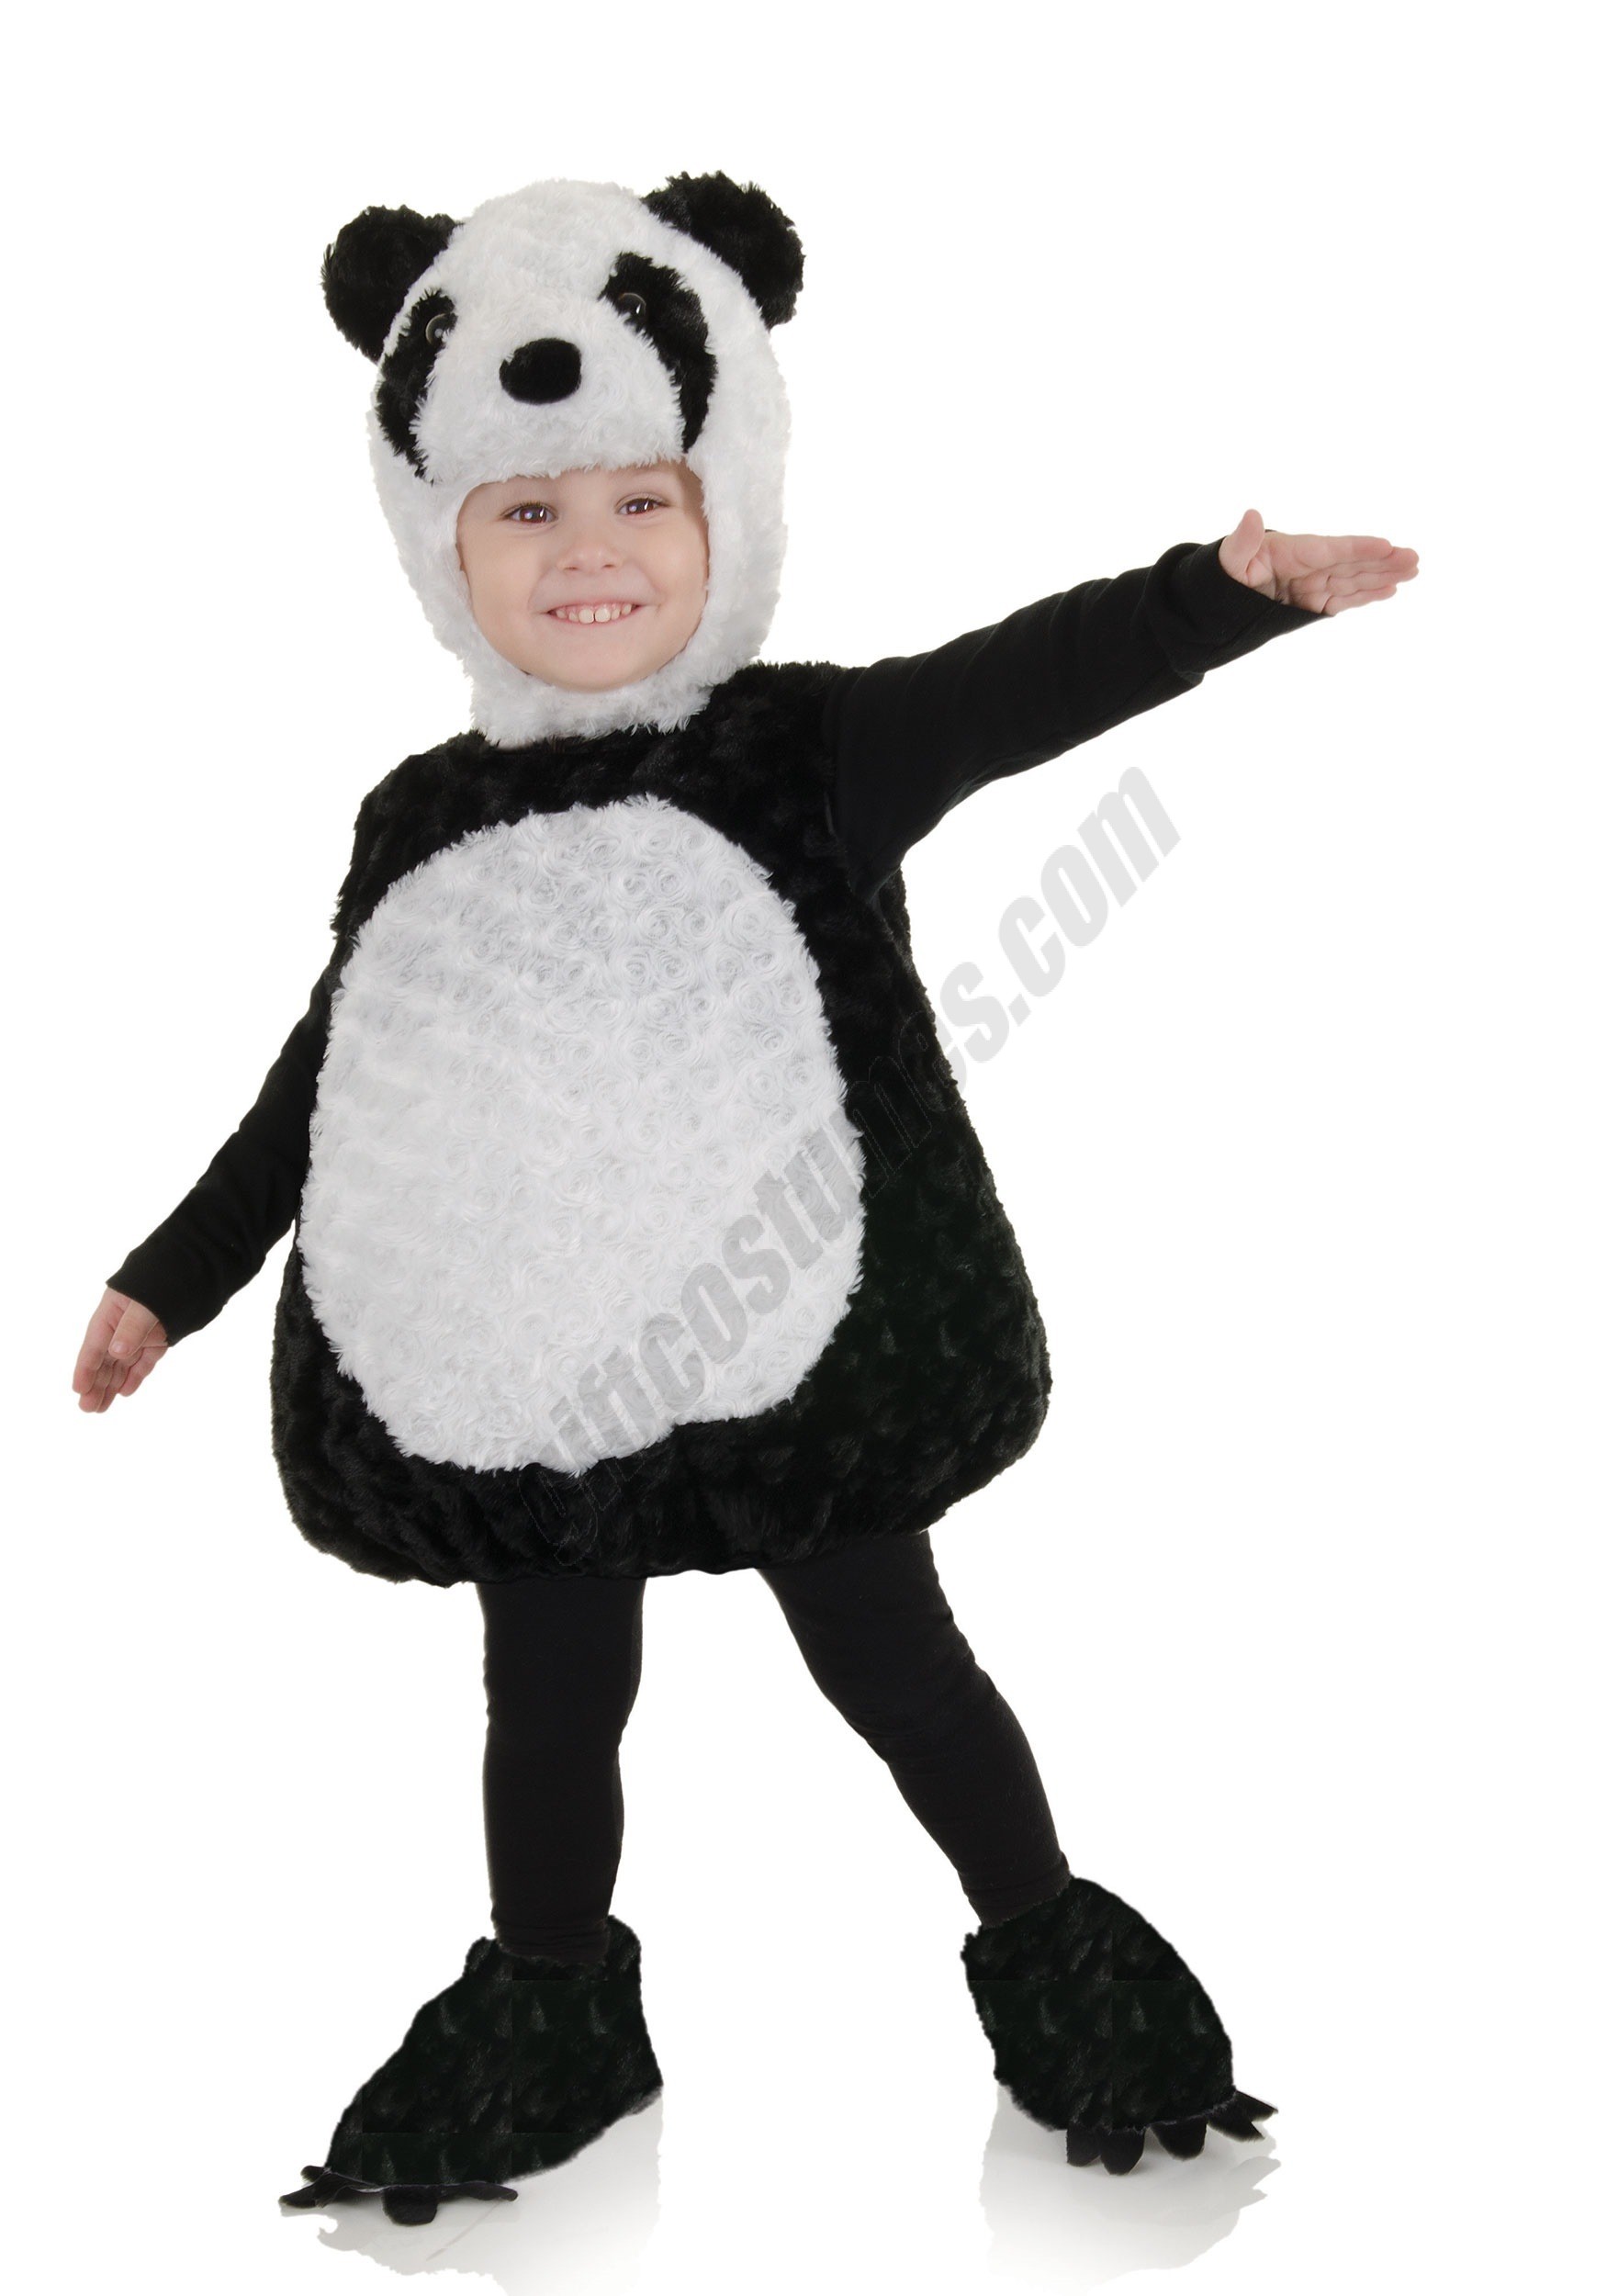 Panda Costume for Toddlers Promotions - Panda Costume for Toddlers Promotions